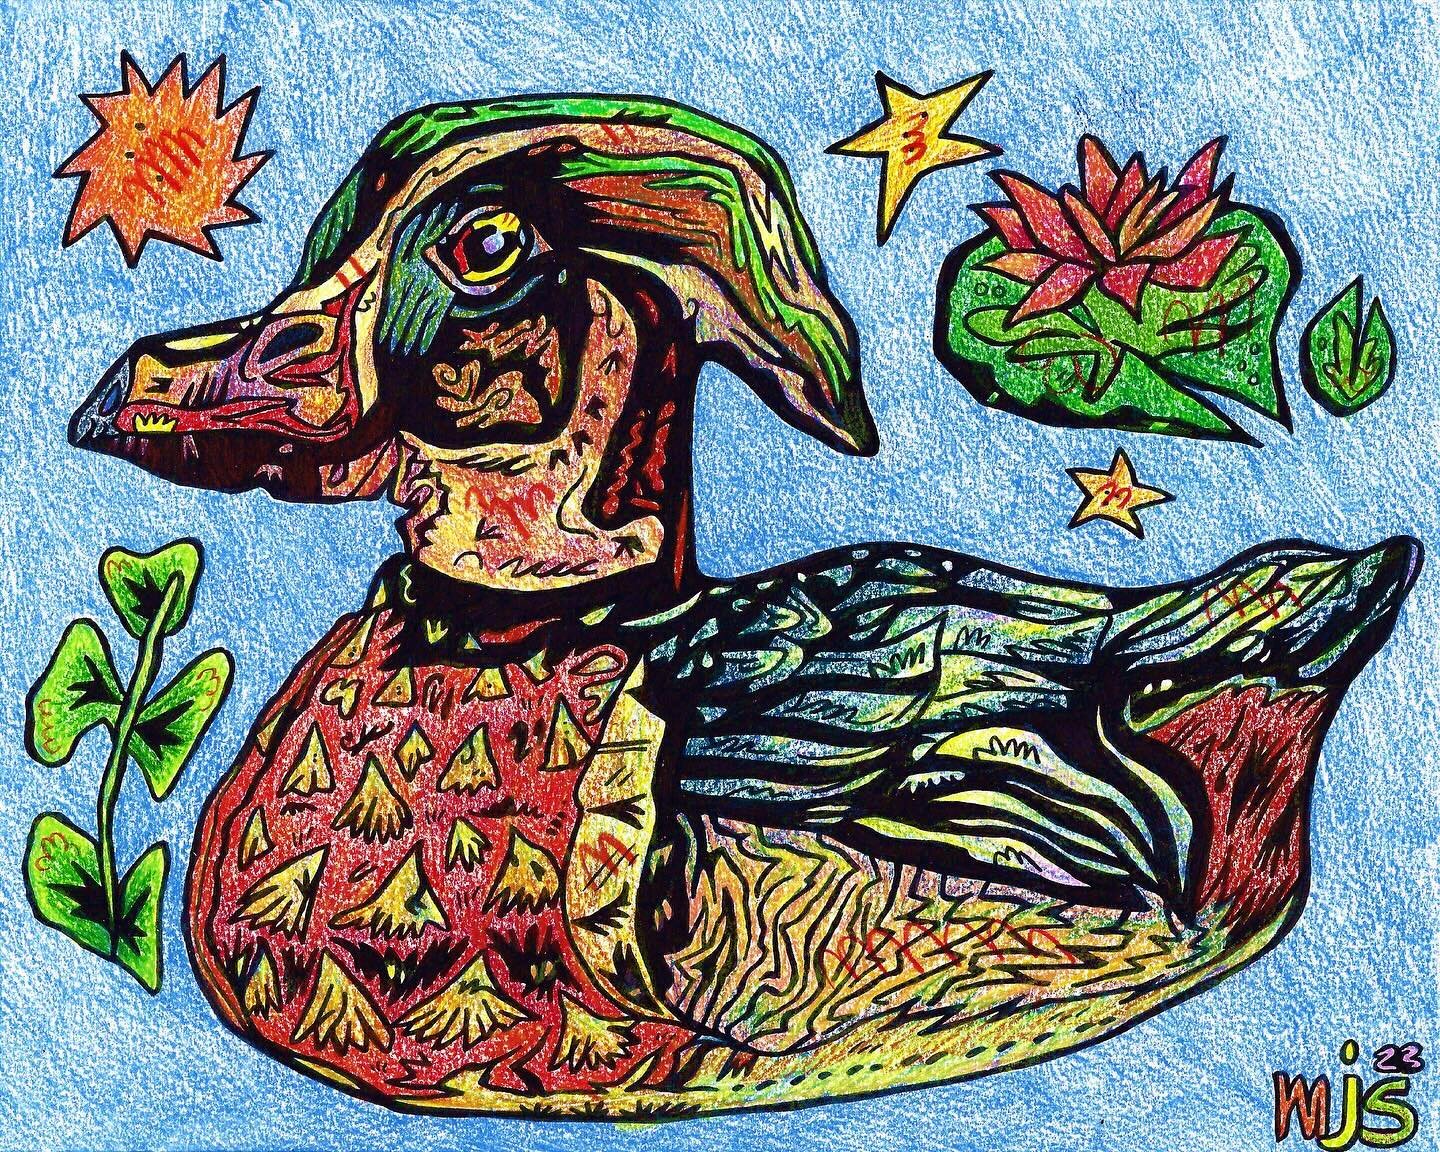 🎄&rsquo;23 / 1: 1977 Toy Workshop Duck 
-
-
-
#coloredpencil #characterdrawing #color #life #duck #art #artist #christmas #pond #artistsoninstagram #cartoon #portrait #illustration #illustrator #artwork #lineart #ink #inkdrawing #digitalart #newmedi